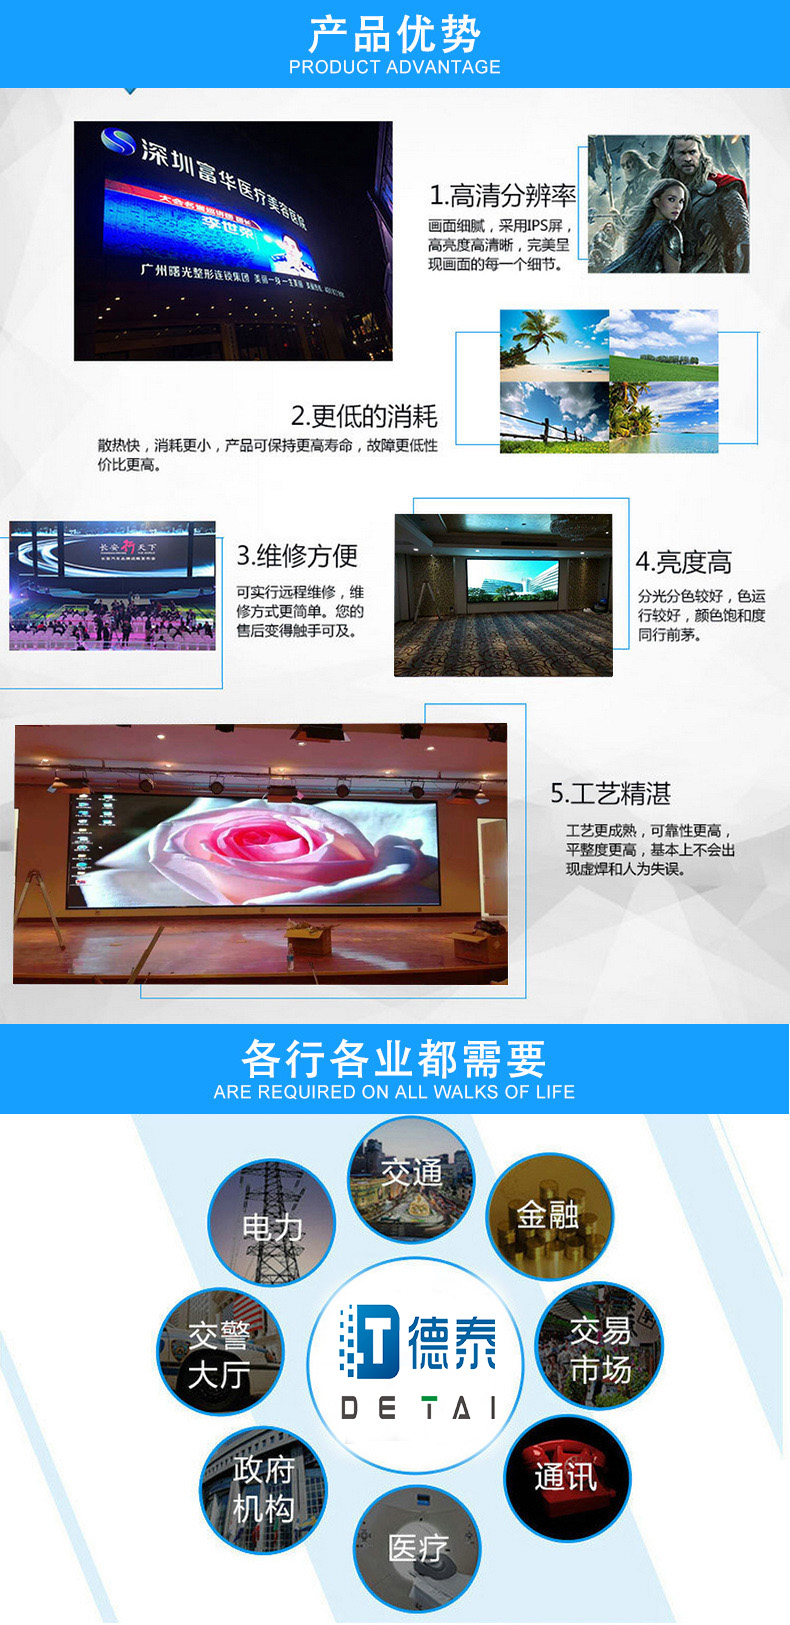 尊龙凯时·[中国]官方网站_image4499